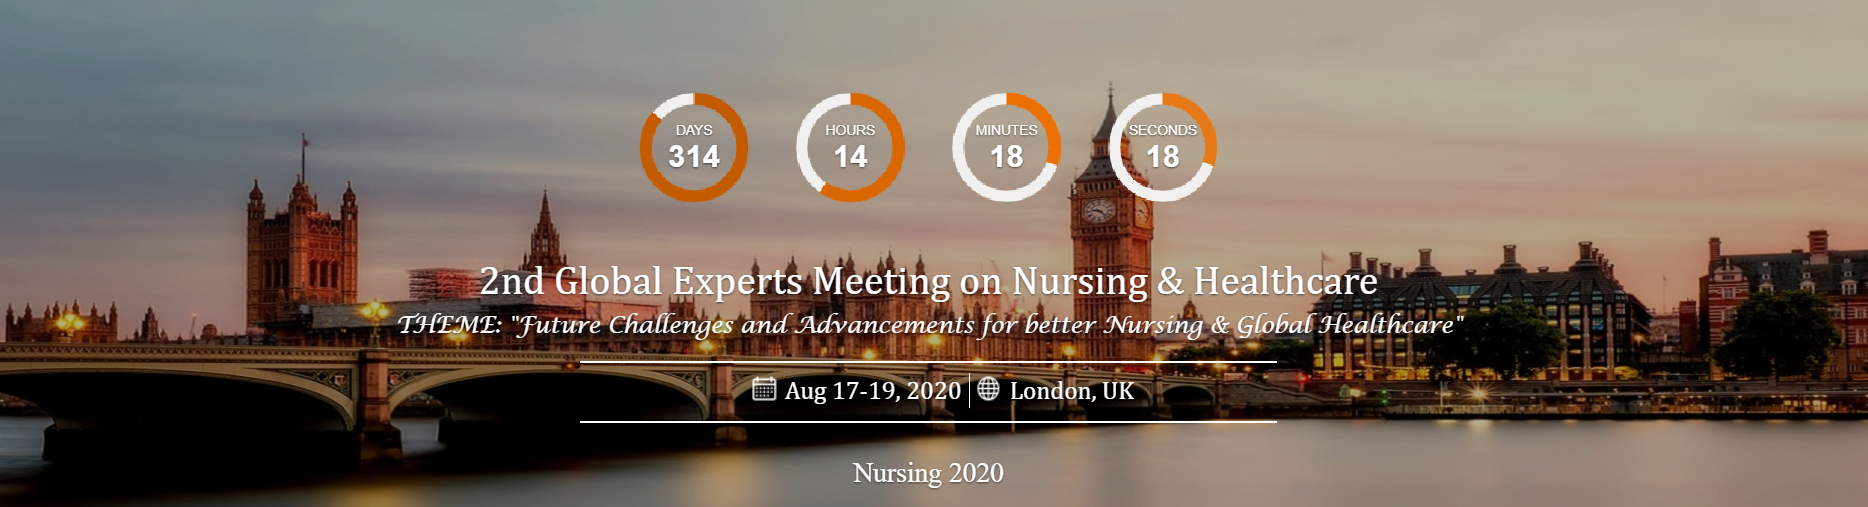 2nd Global Experts Meeting on Nursing & Healthcare, London, United Kingdom